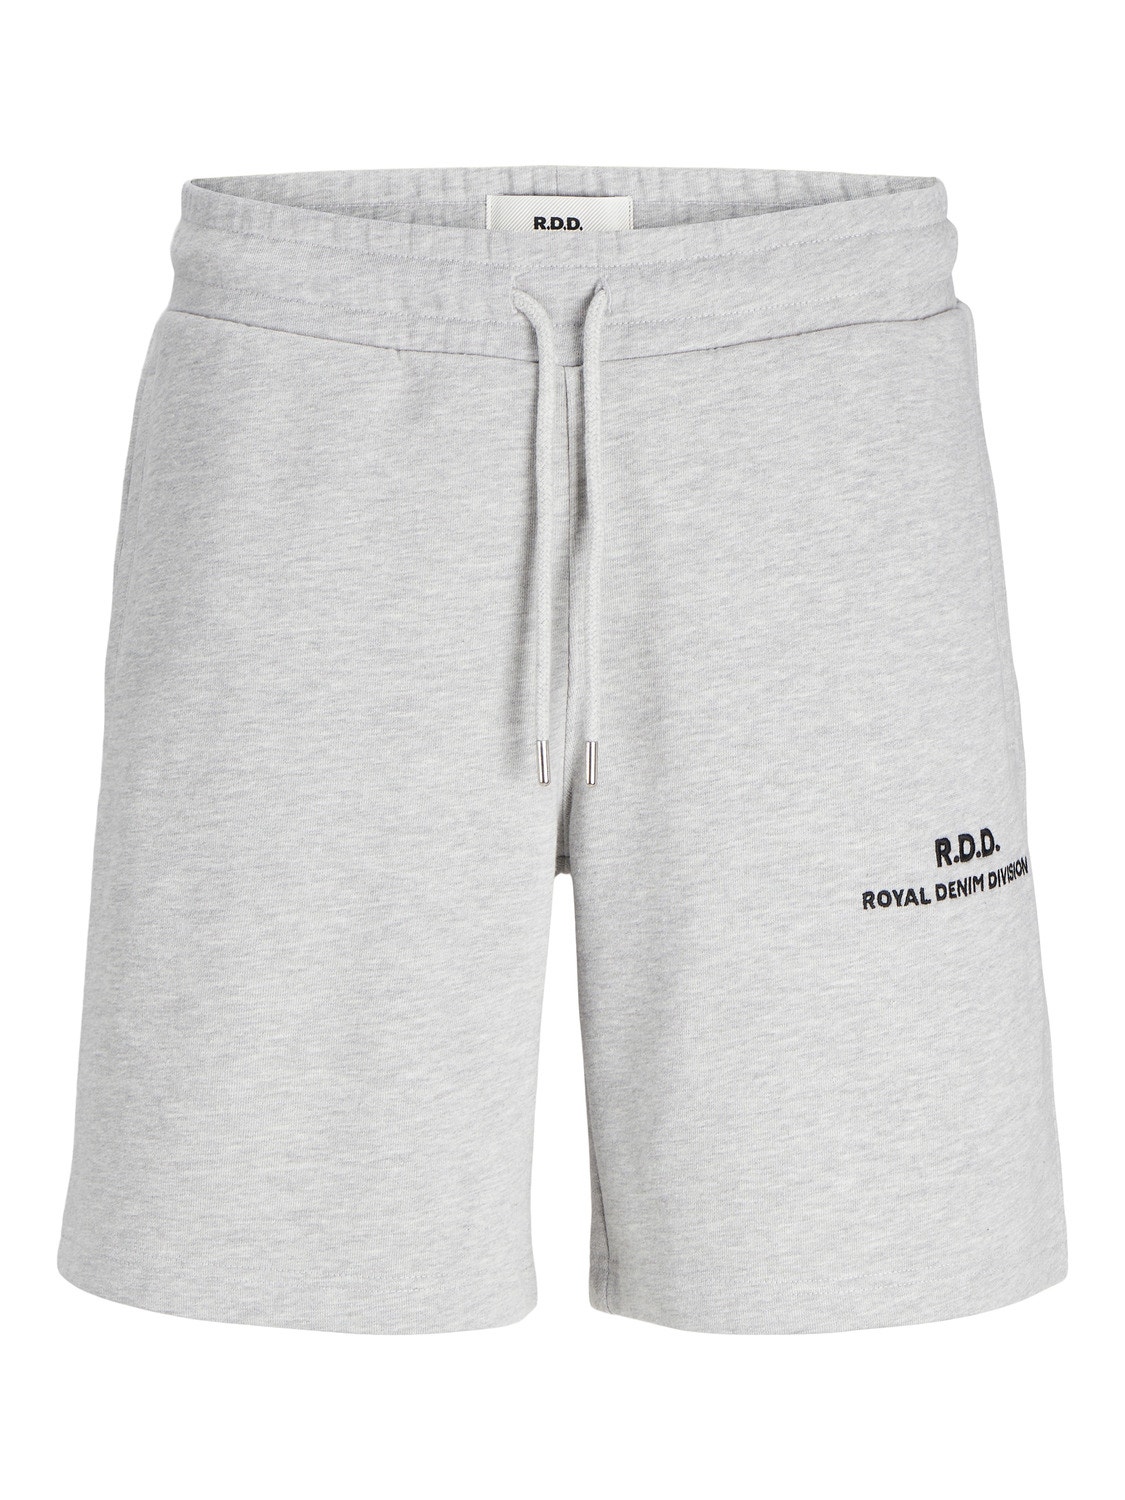 Jack & Jones RDD Relaxed Fit Sweat shorts -Light Grey Melange - 12255277